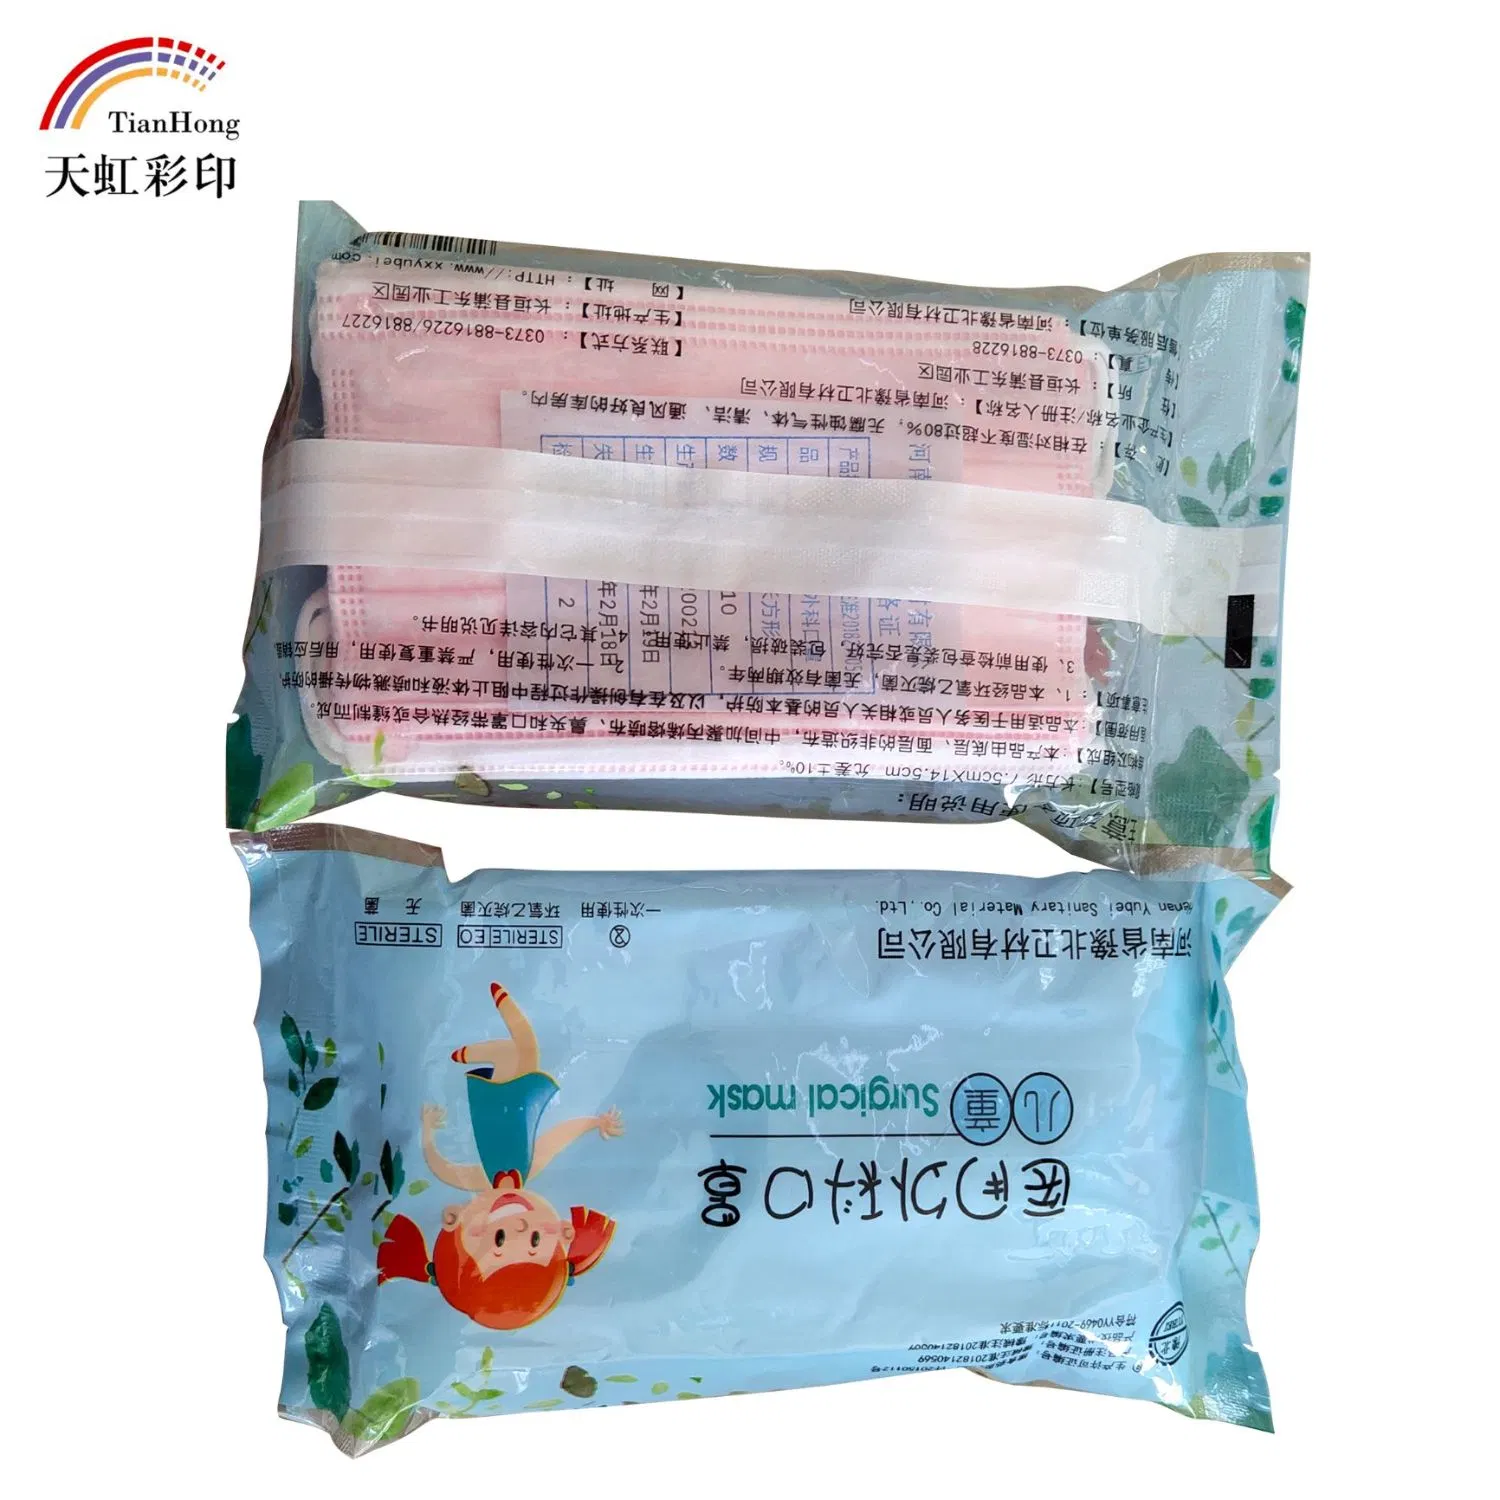 Children's Mask Plastic Packaging Bag Material Safety.